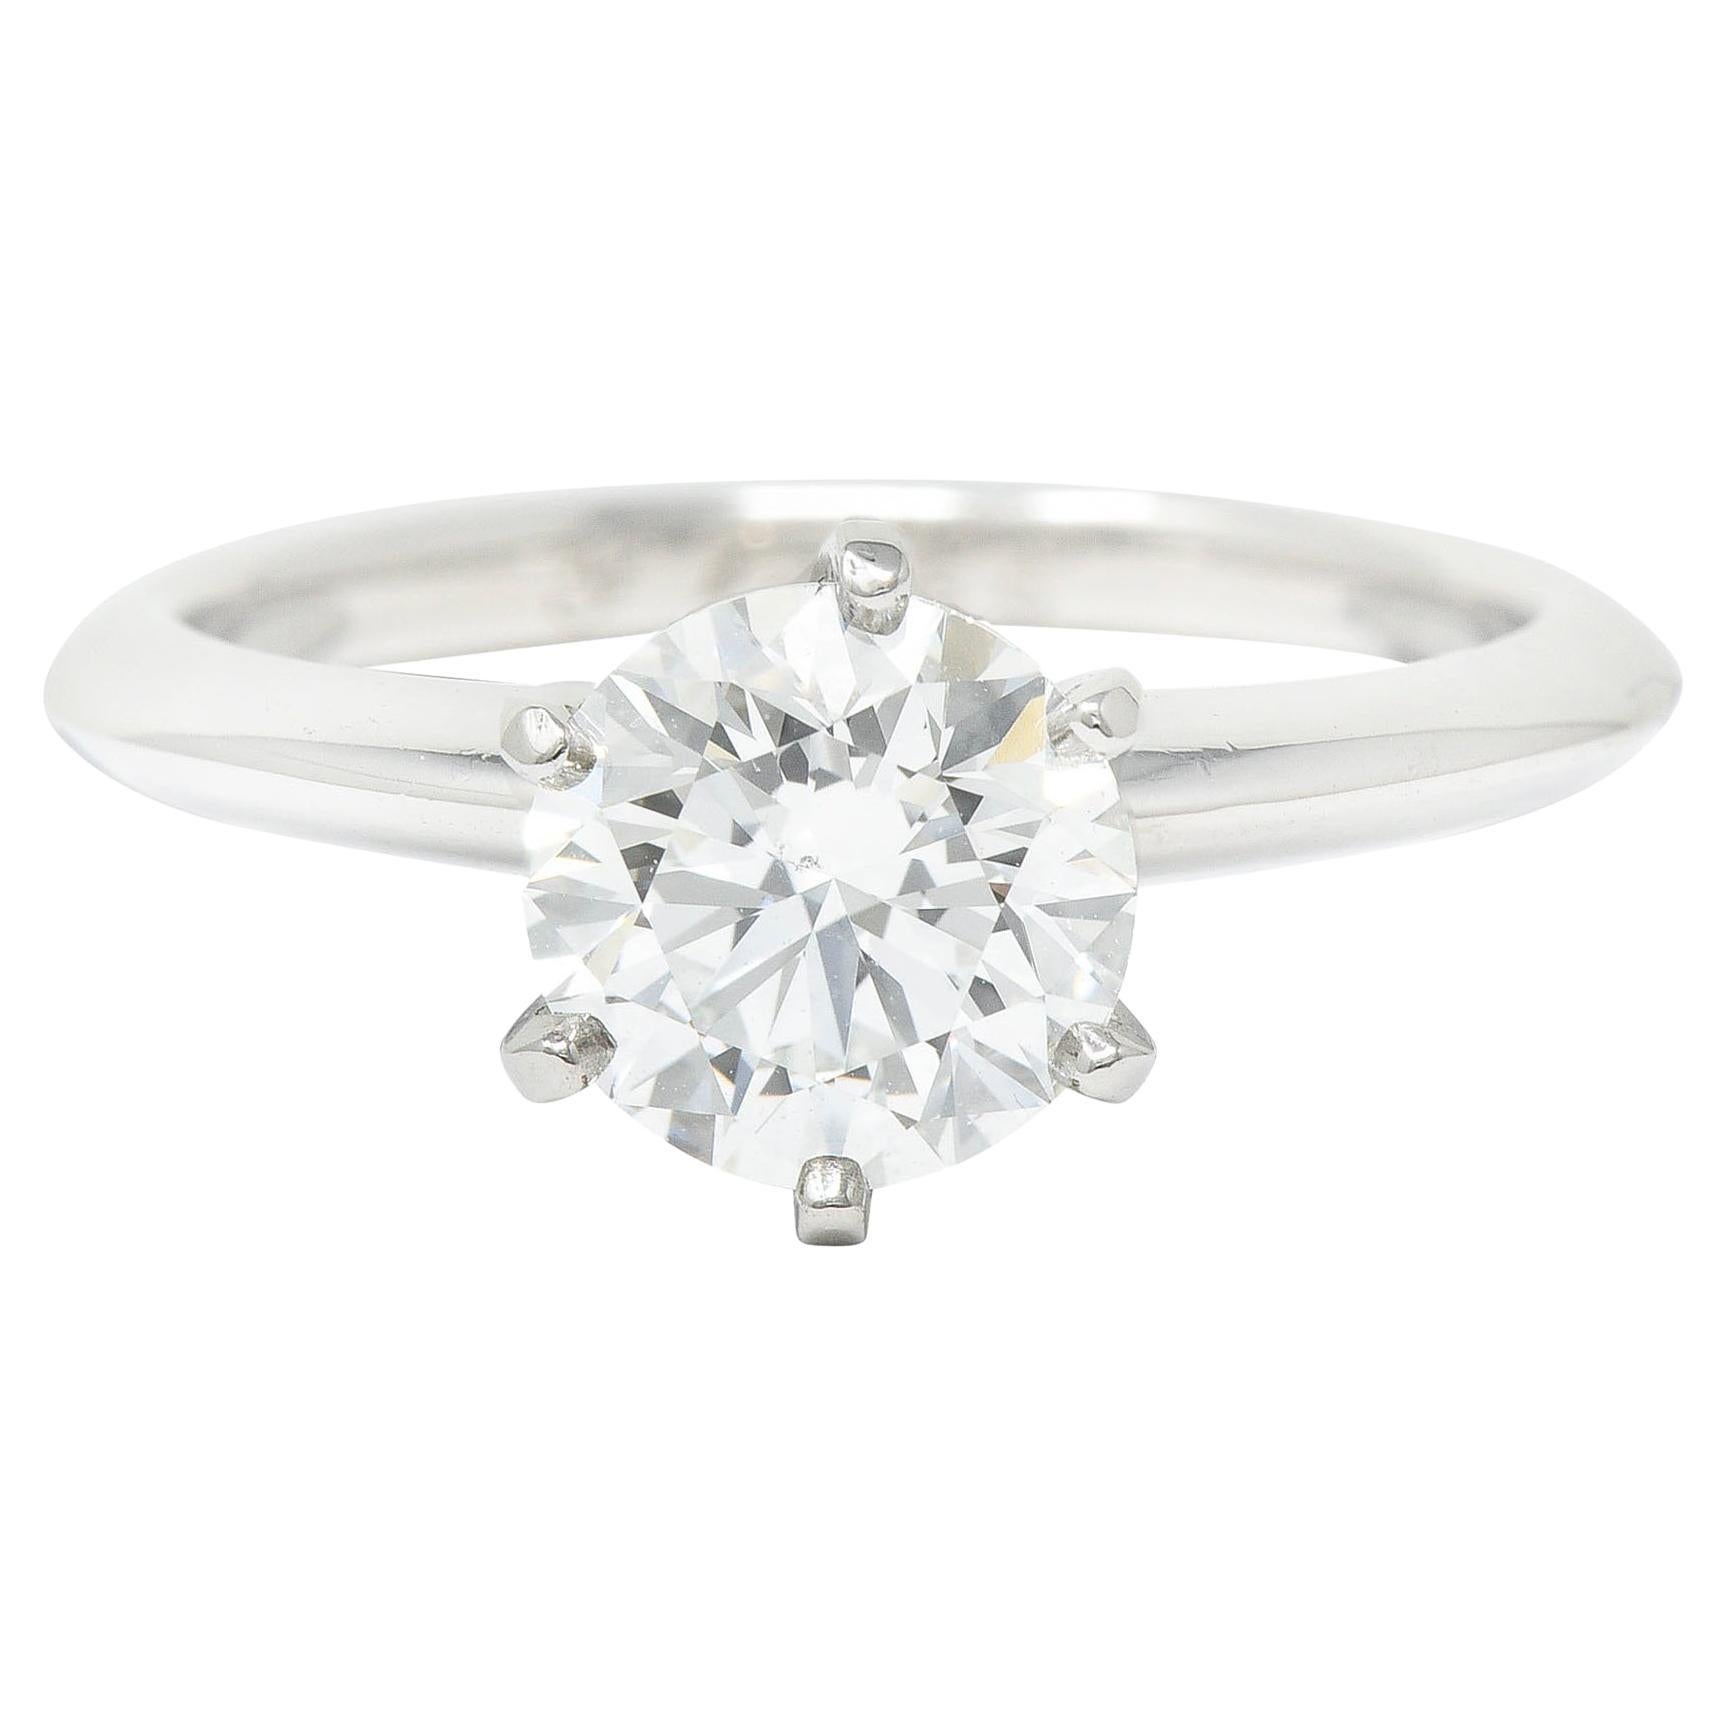 Tiffany & Co. 1.38 Carats Diamond Platinum Solitaire Engagement Ring